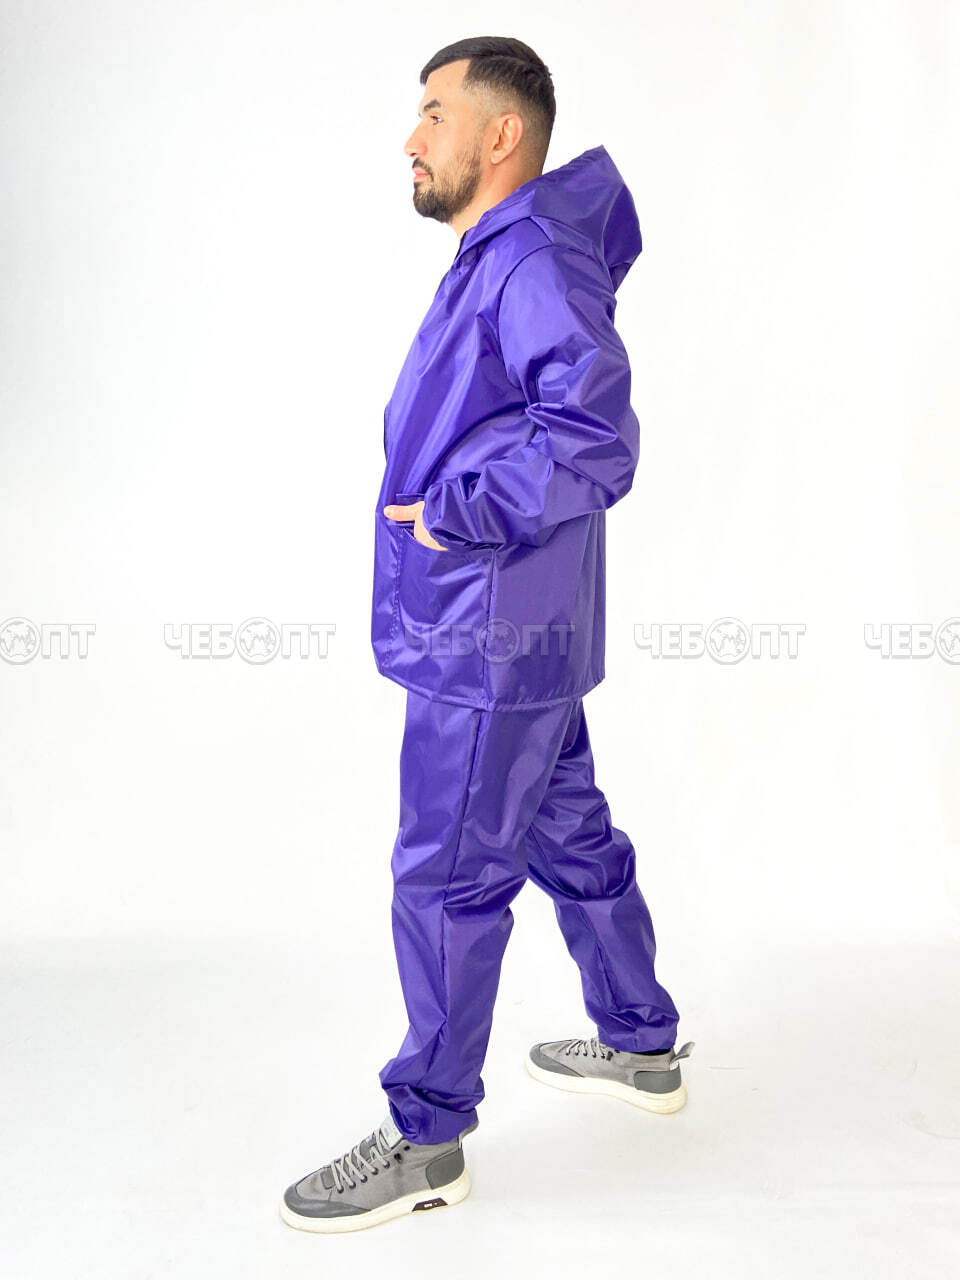 Костюм-дождевик (куртка, брюки),ЧЕБПРО,размер 52-54,100% полиэстер, Арт. ДожКостМуж/фиолетовый, МПС [3/15] СобПр. ЧЕБОПТ.